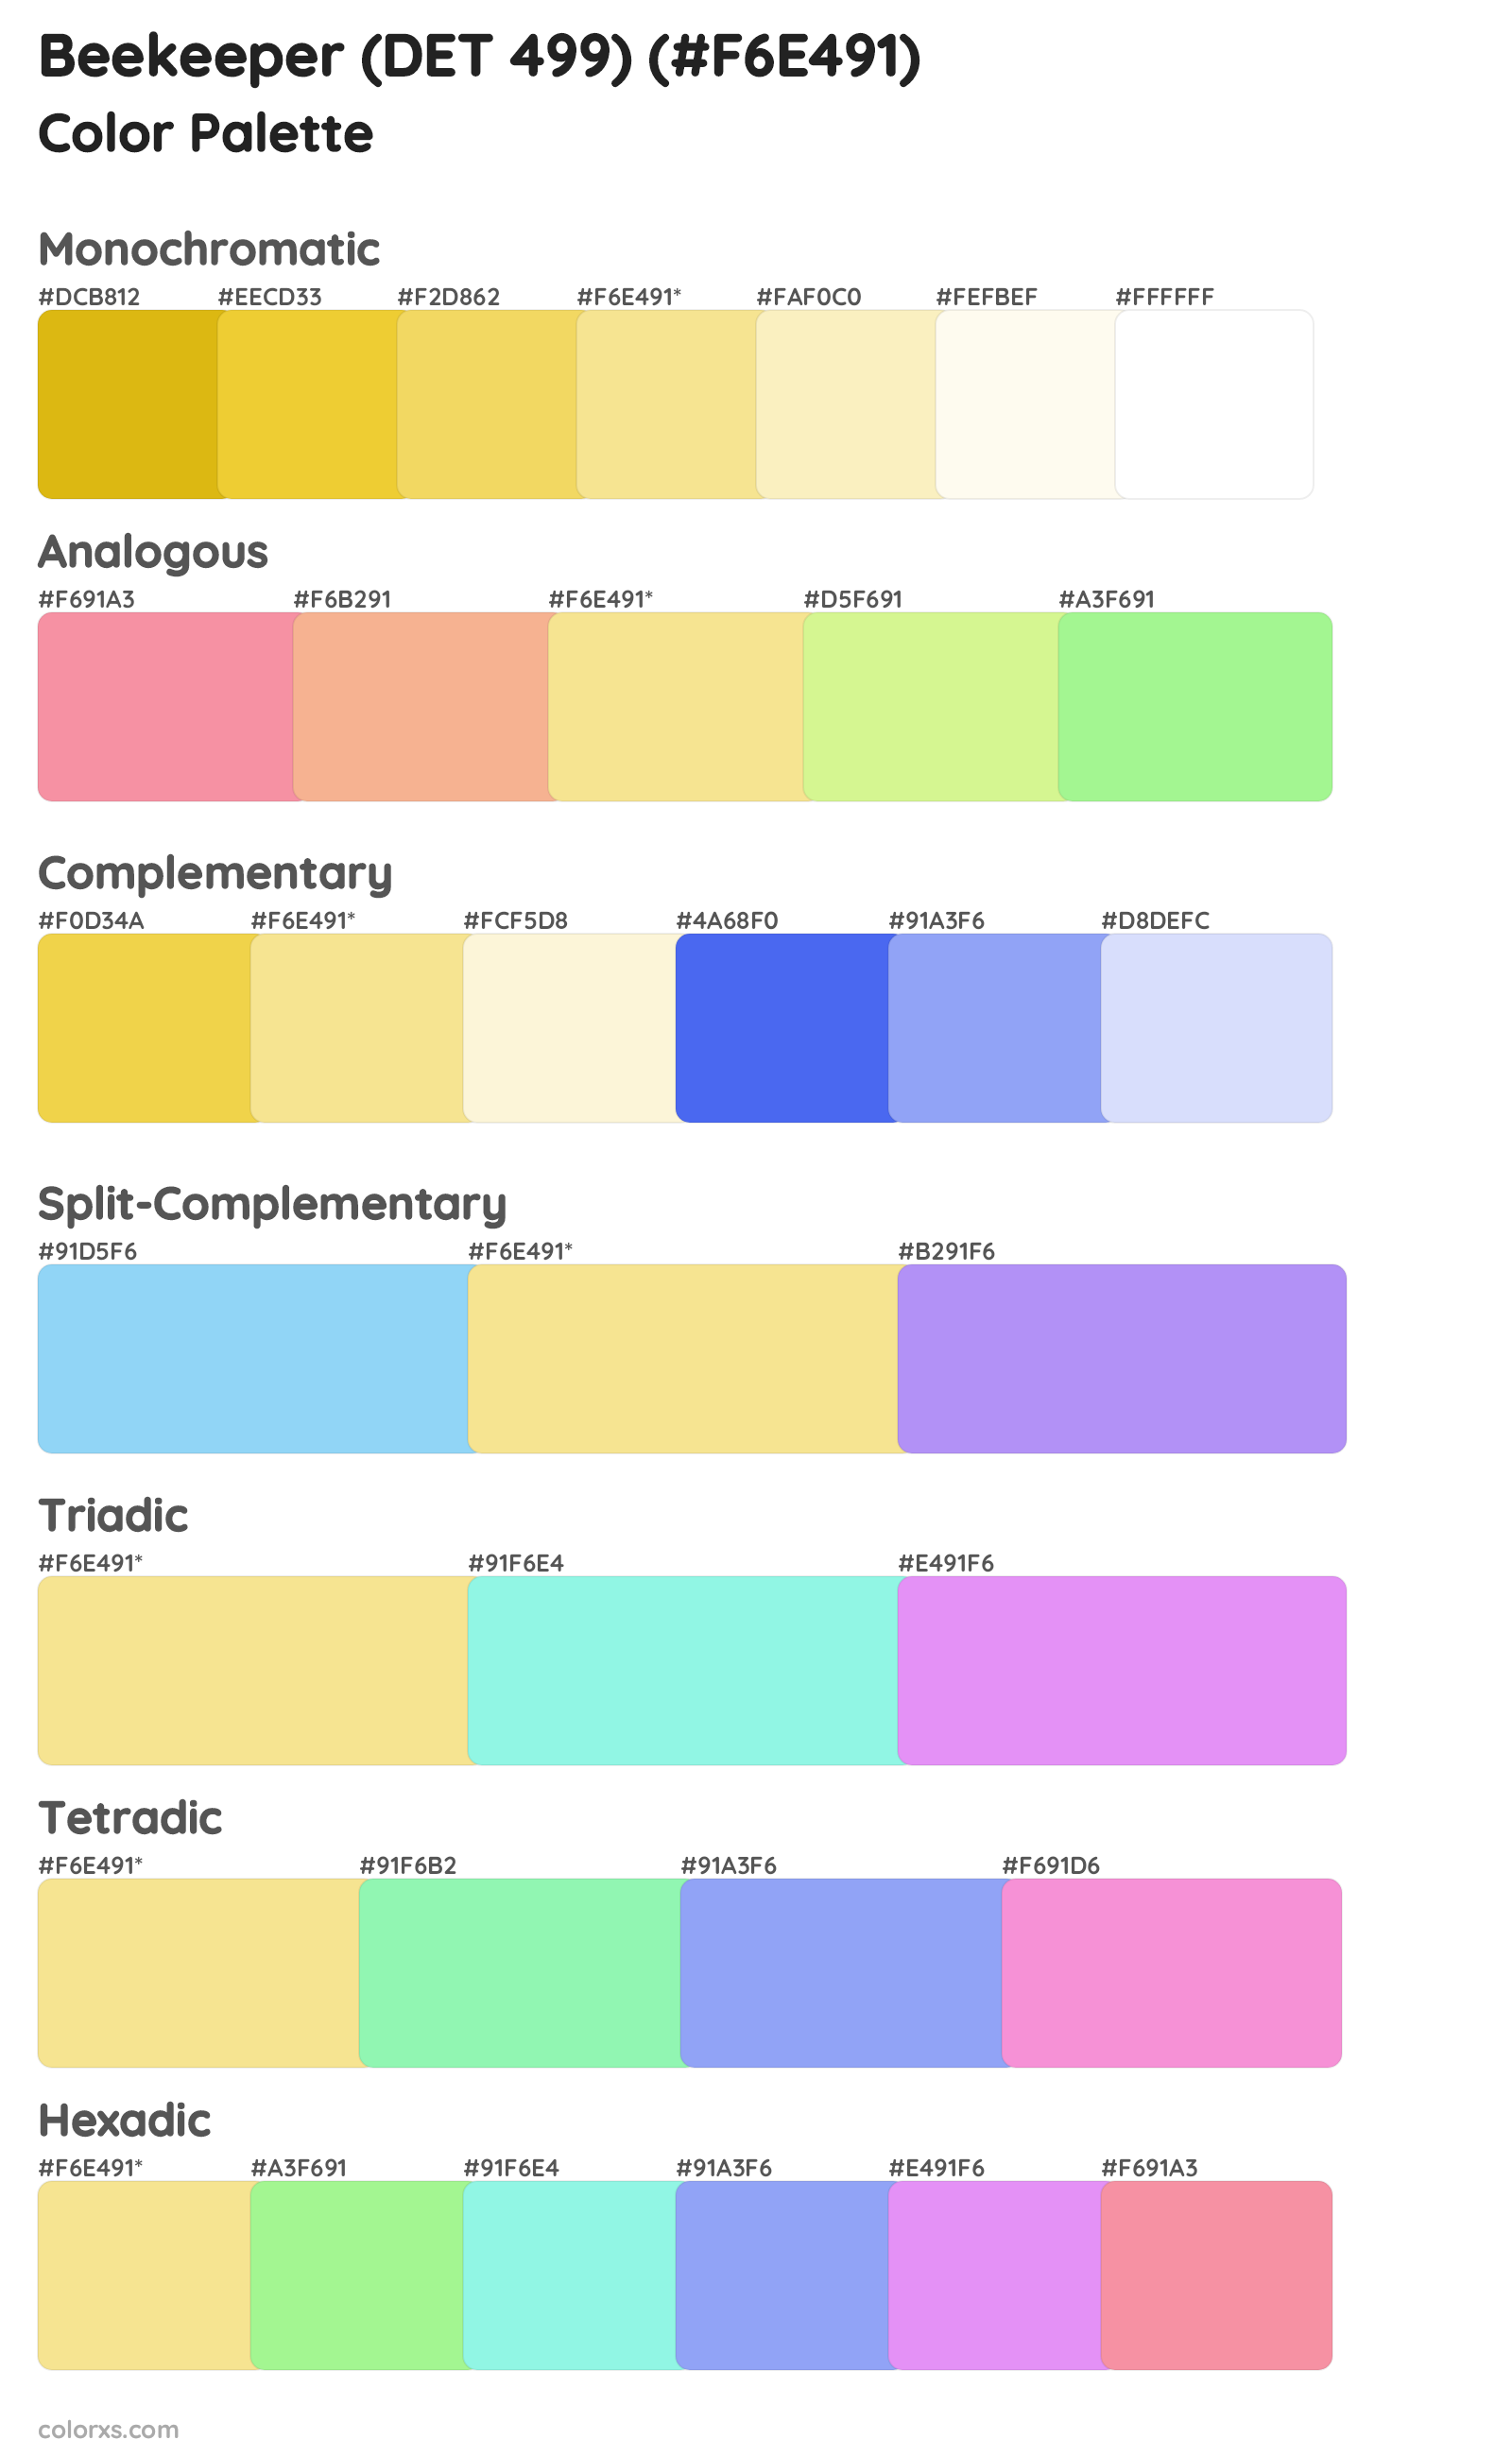 Beekeeper (DET 499) Color Scheme Palettes